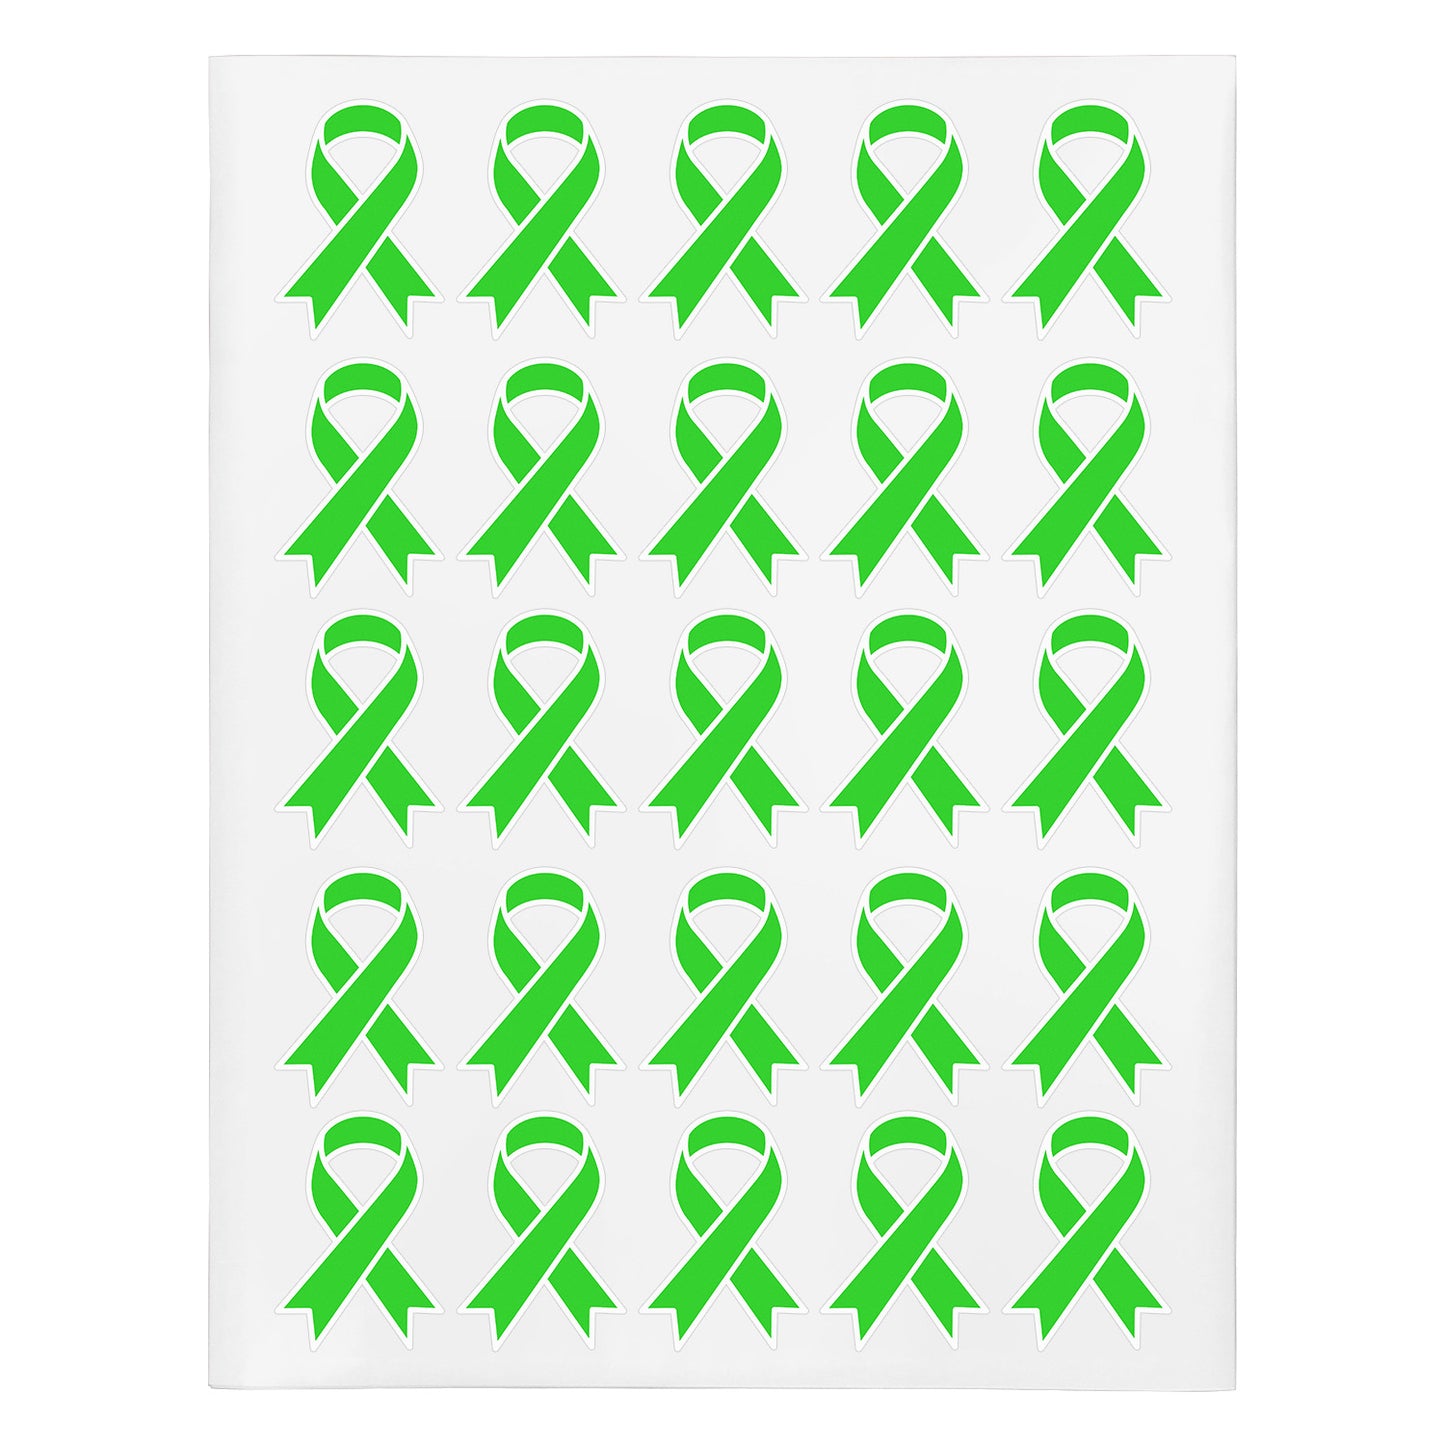 2.2 x 1.6 inch | Awareness: Fluorescent Green Awareness Ribbon Stickers